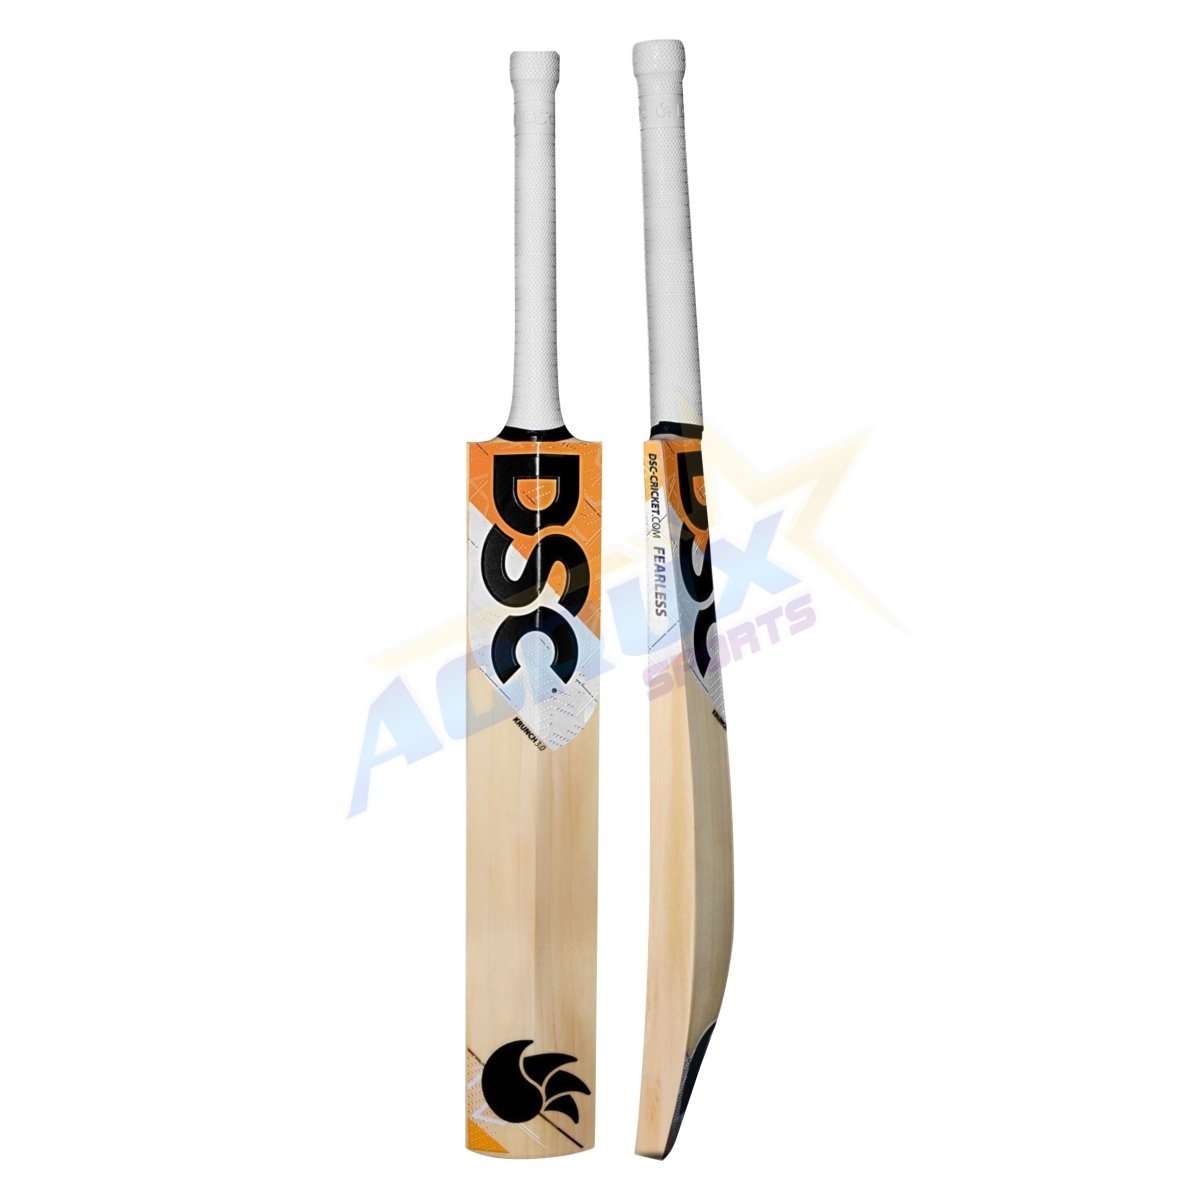 DSC Krunch 3.0 English Willow Cricket Bat - Acrux Sports